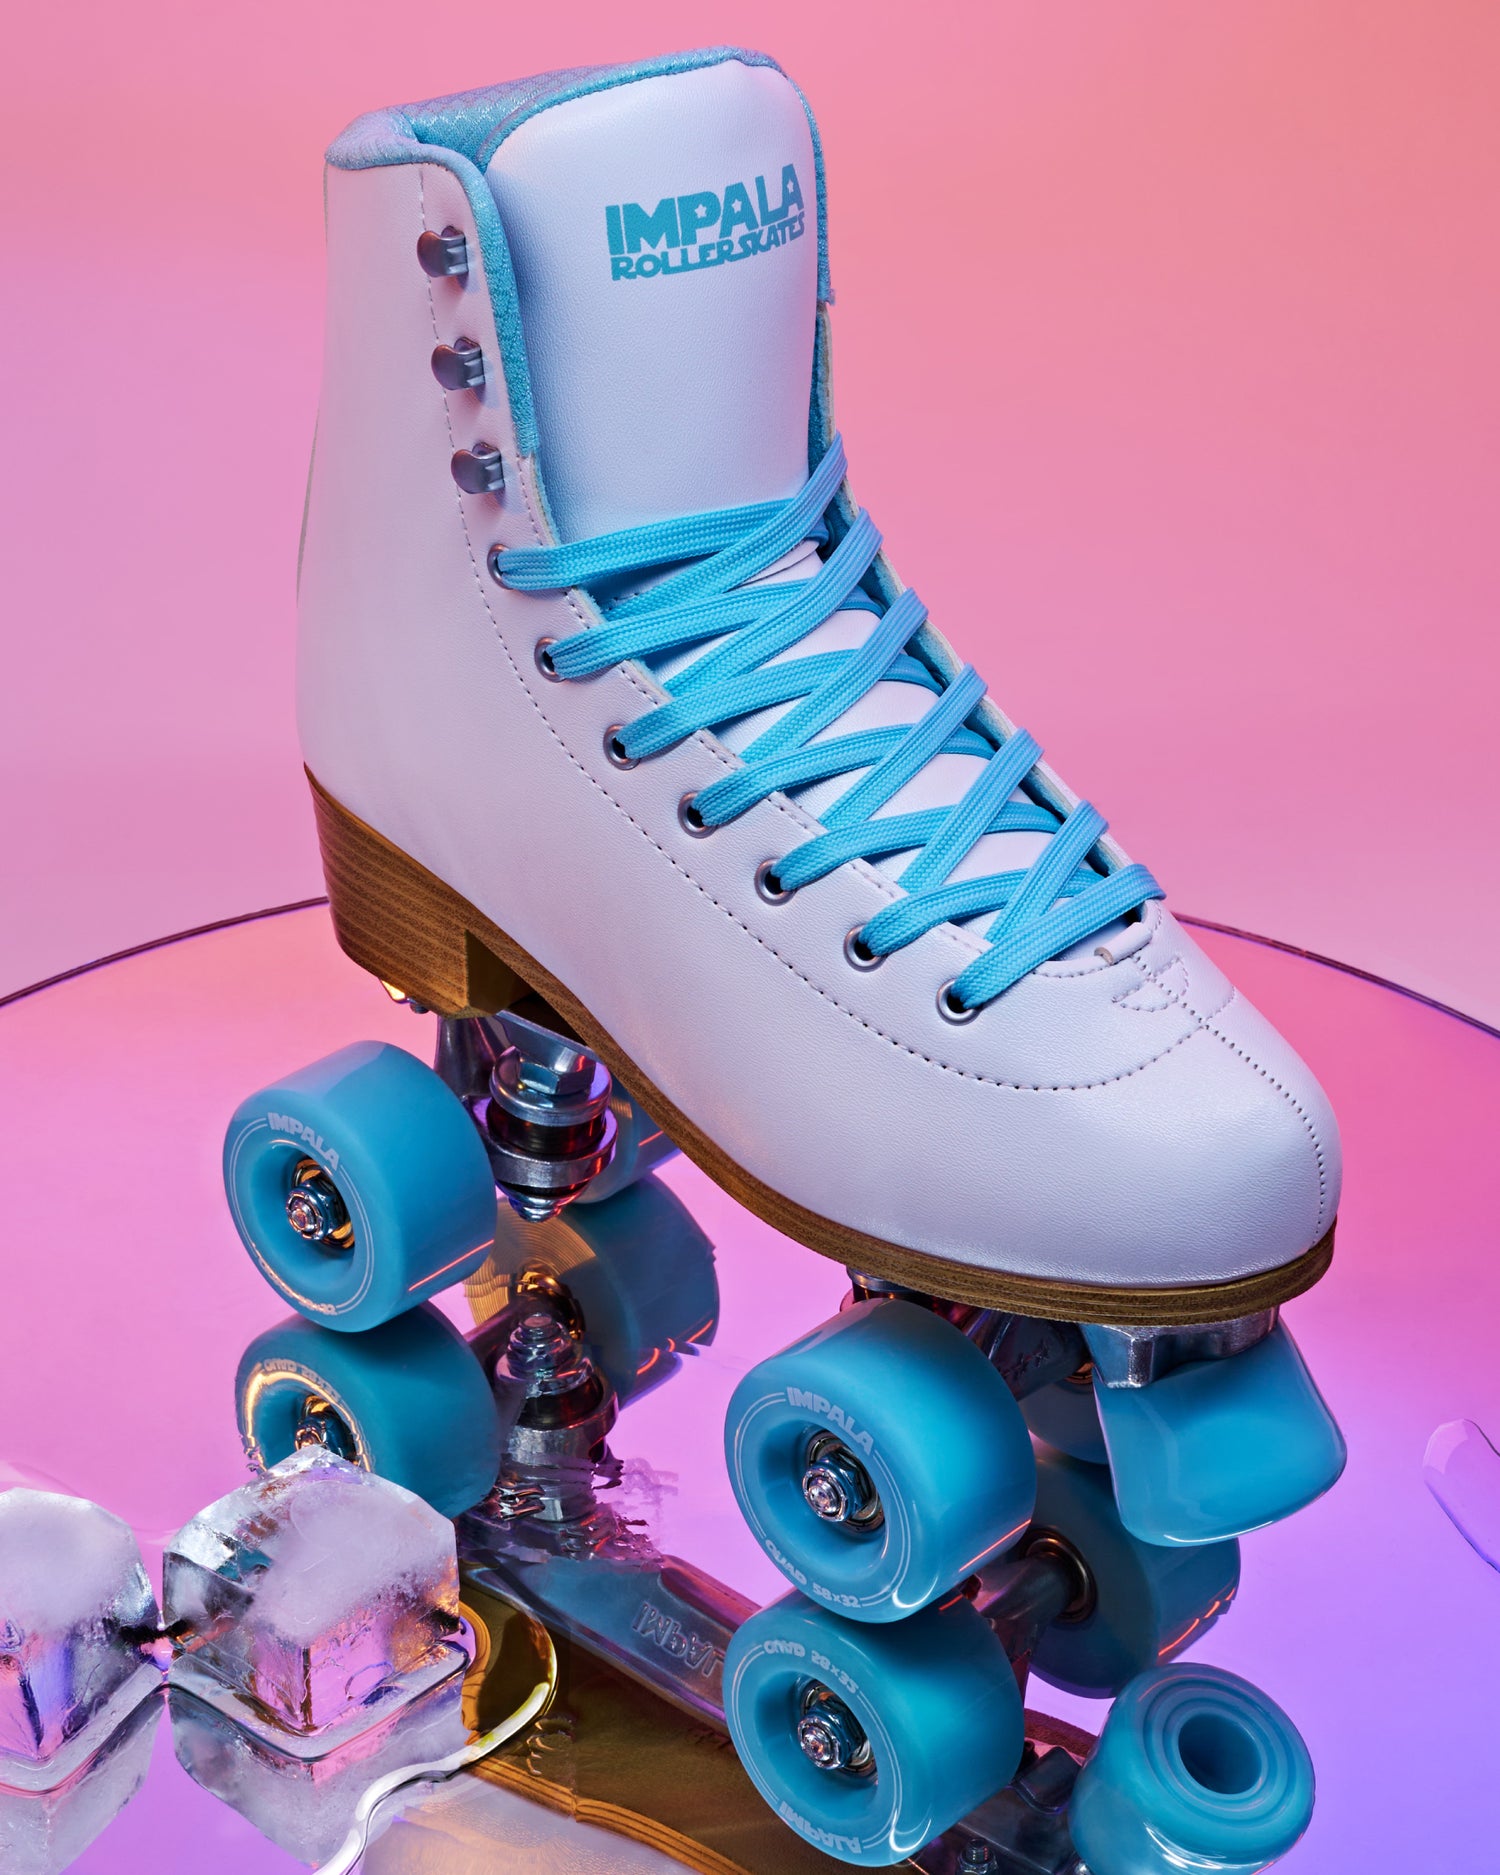 Impala Roller Skates - White Ice